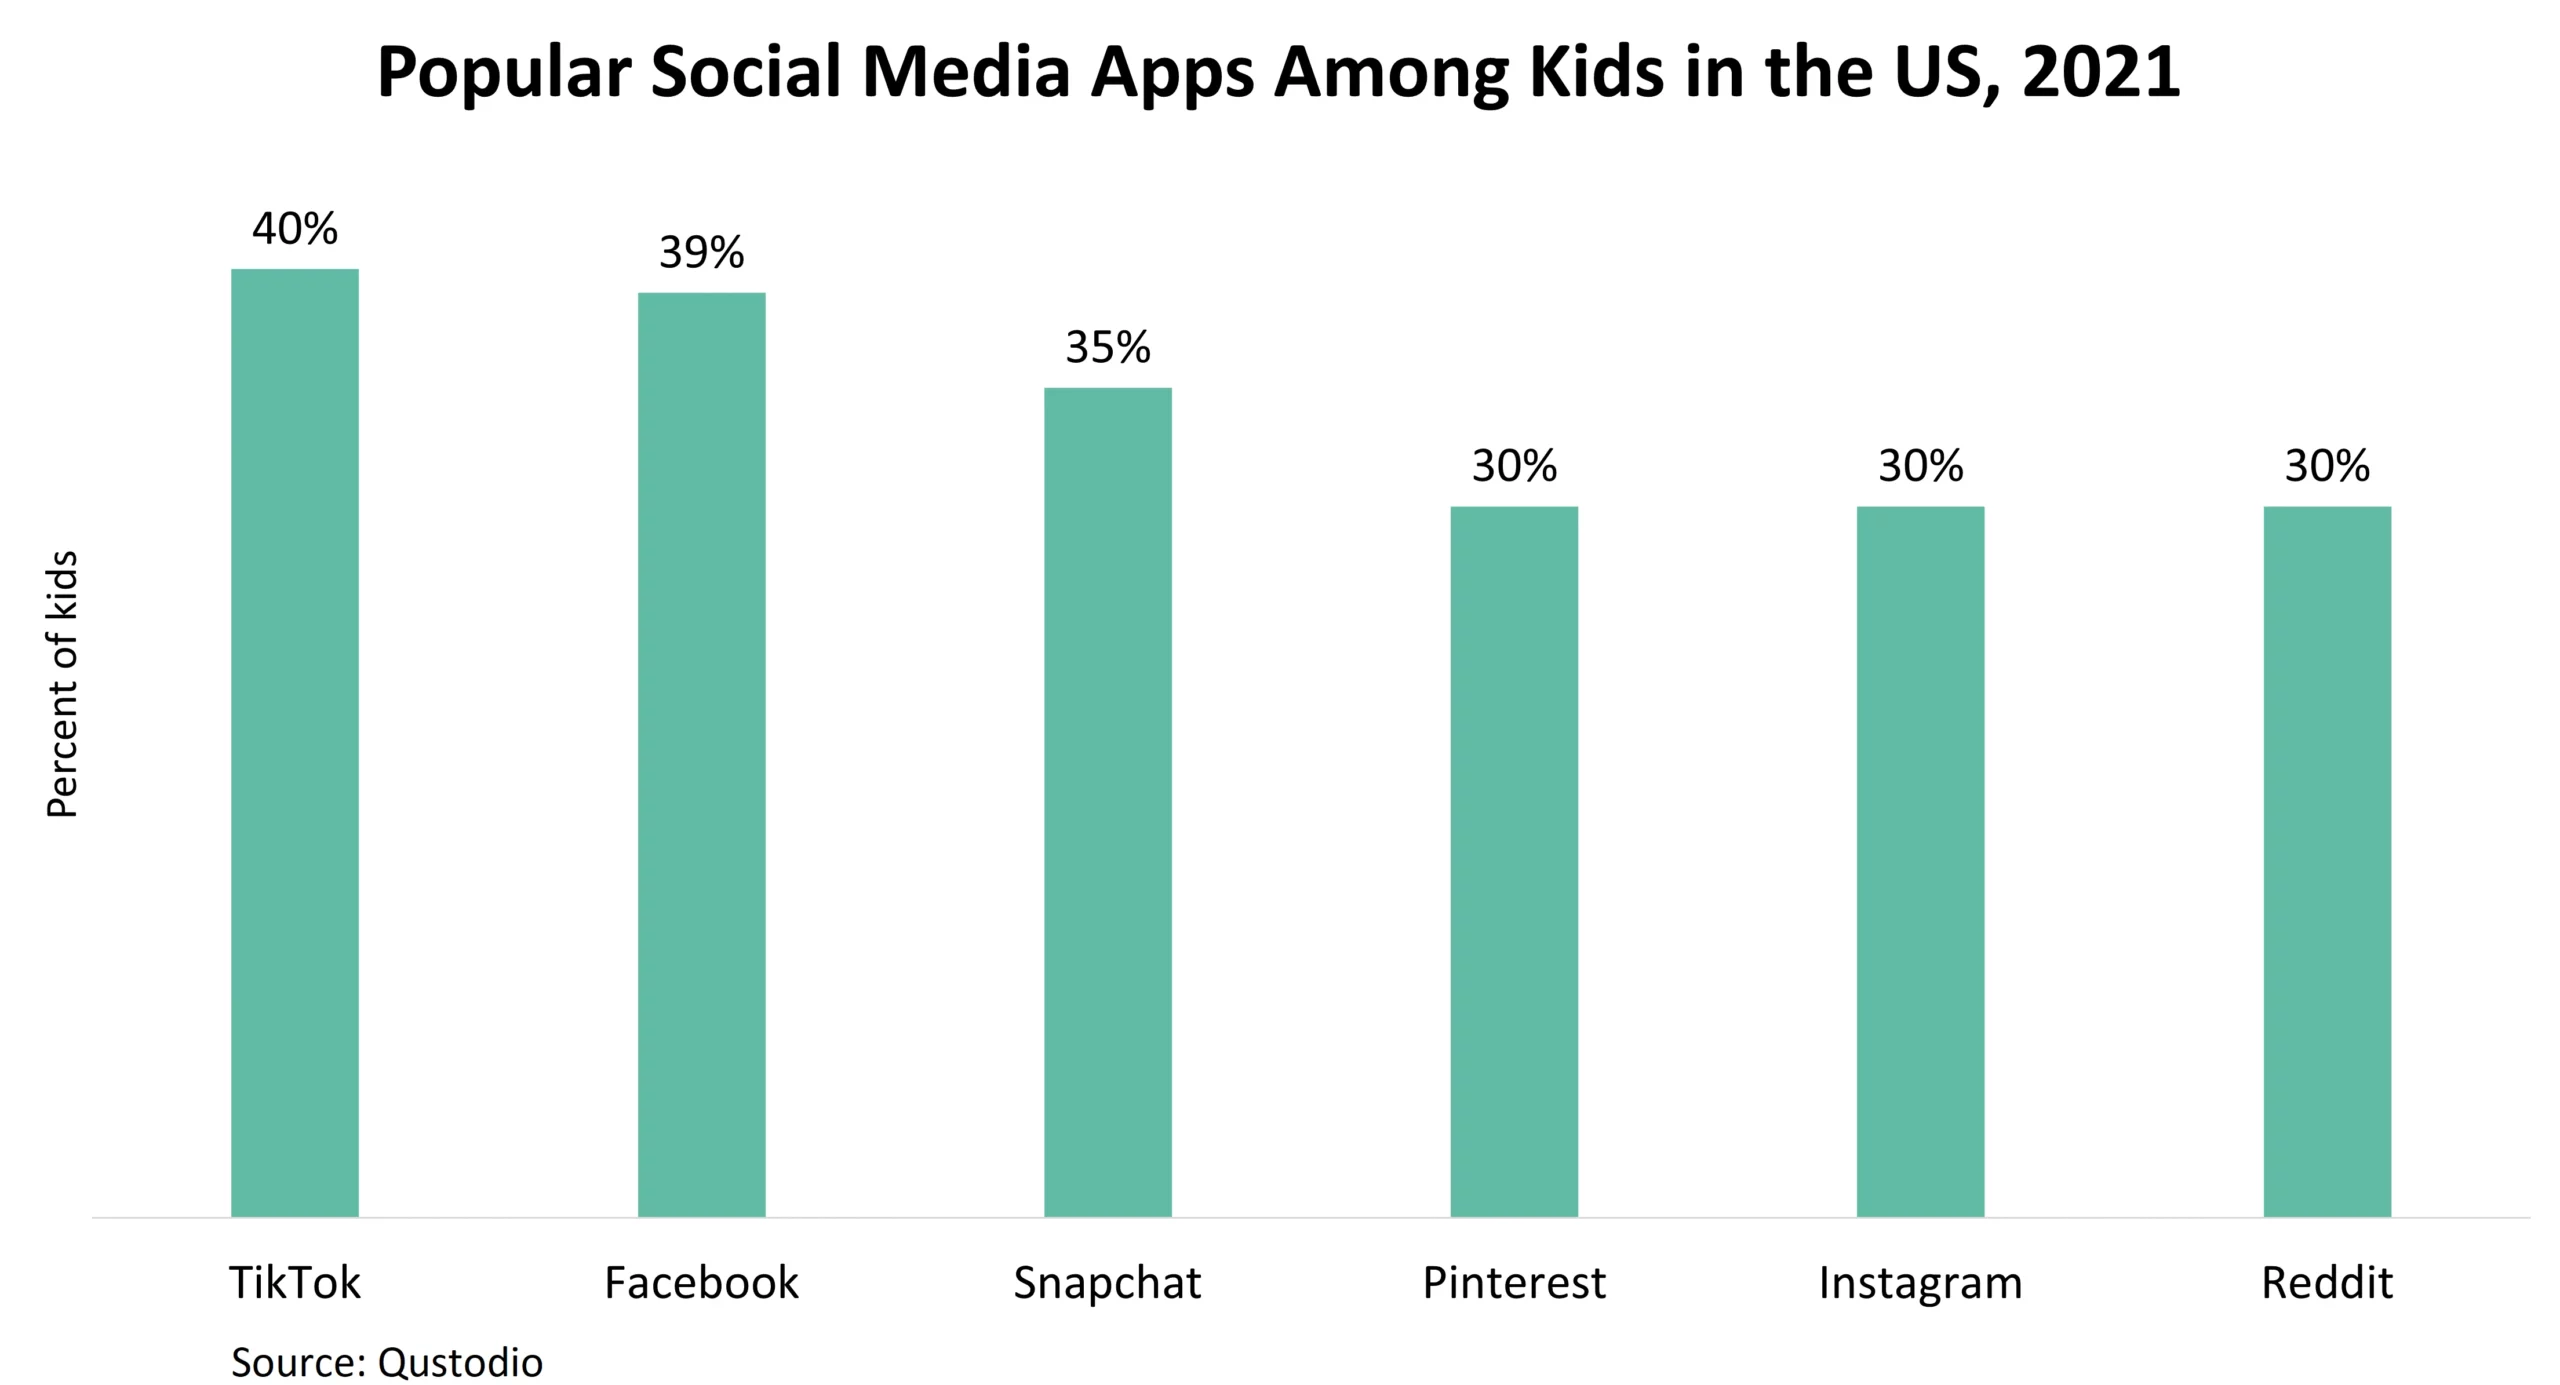 Popular Social Media Apps Among Kids in the US in 2021